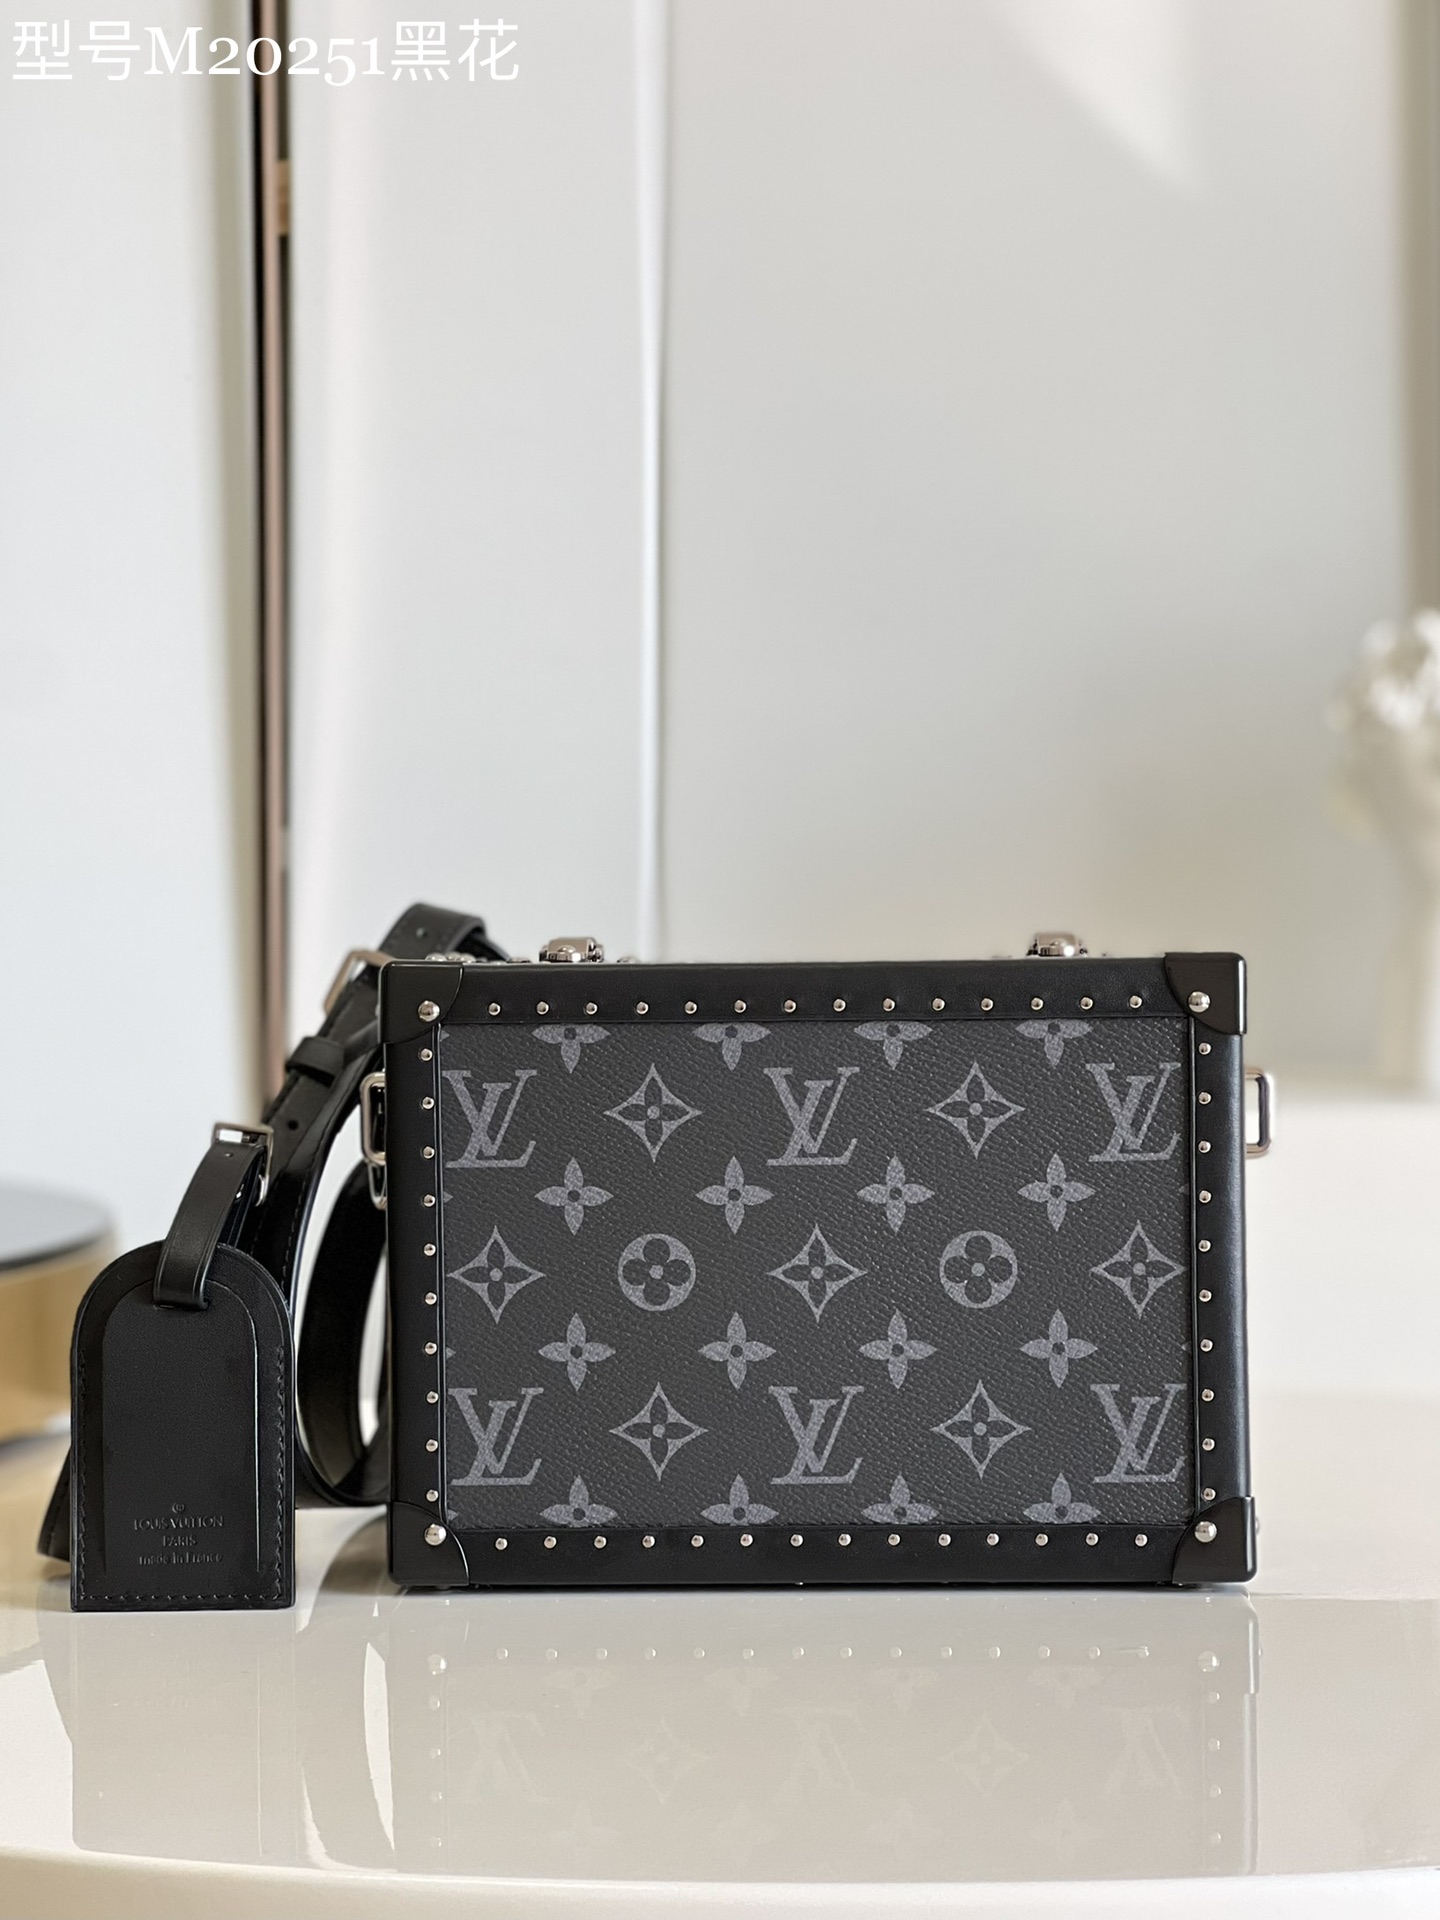 Louis Vuitton Copy
 Bags Handbags UK 7 Star Replica
 Black Monogram Canvas Fashion M20251